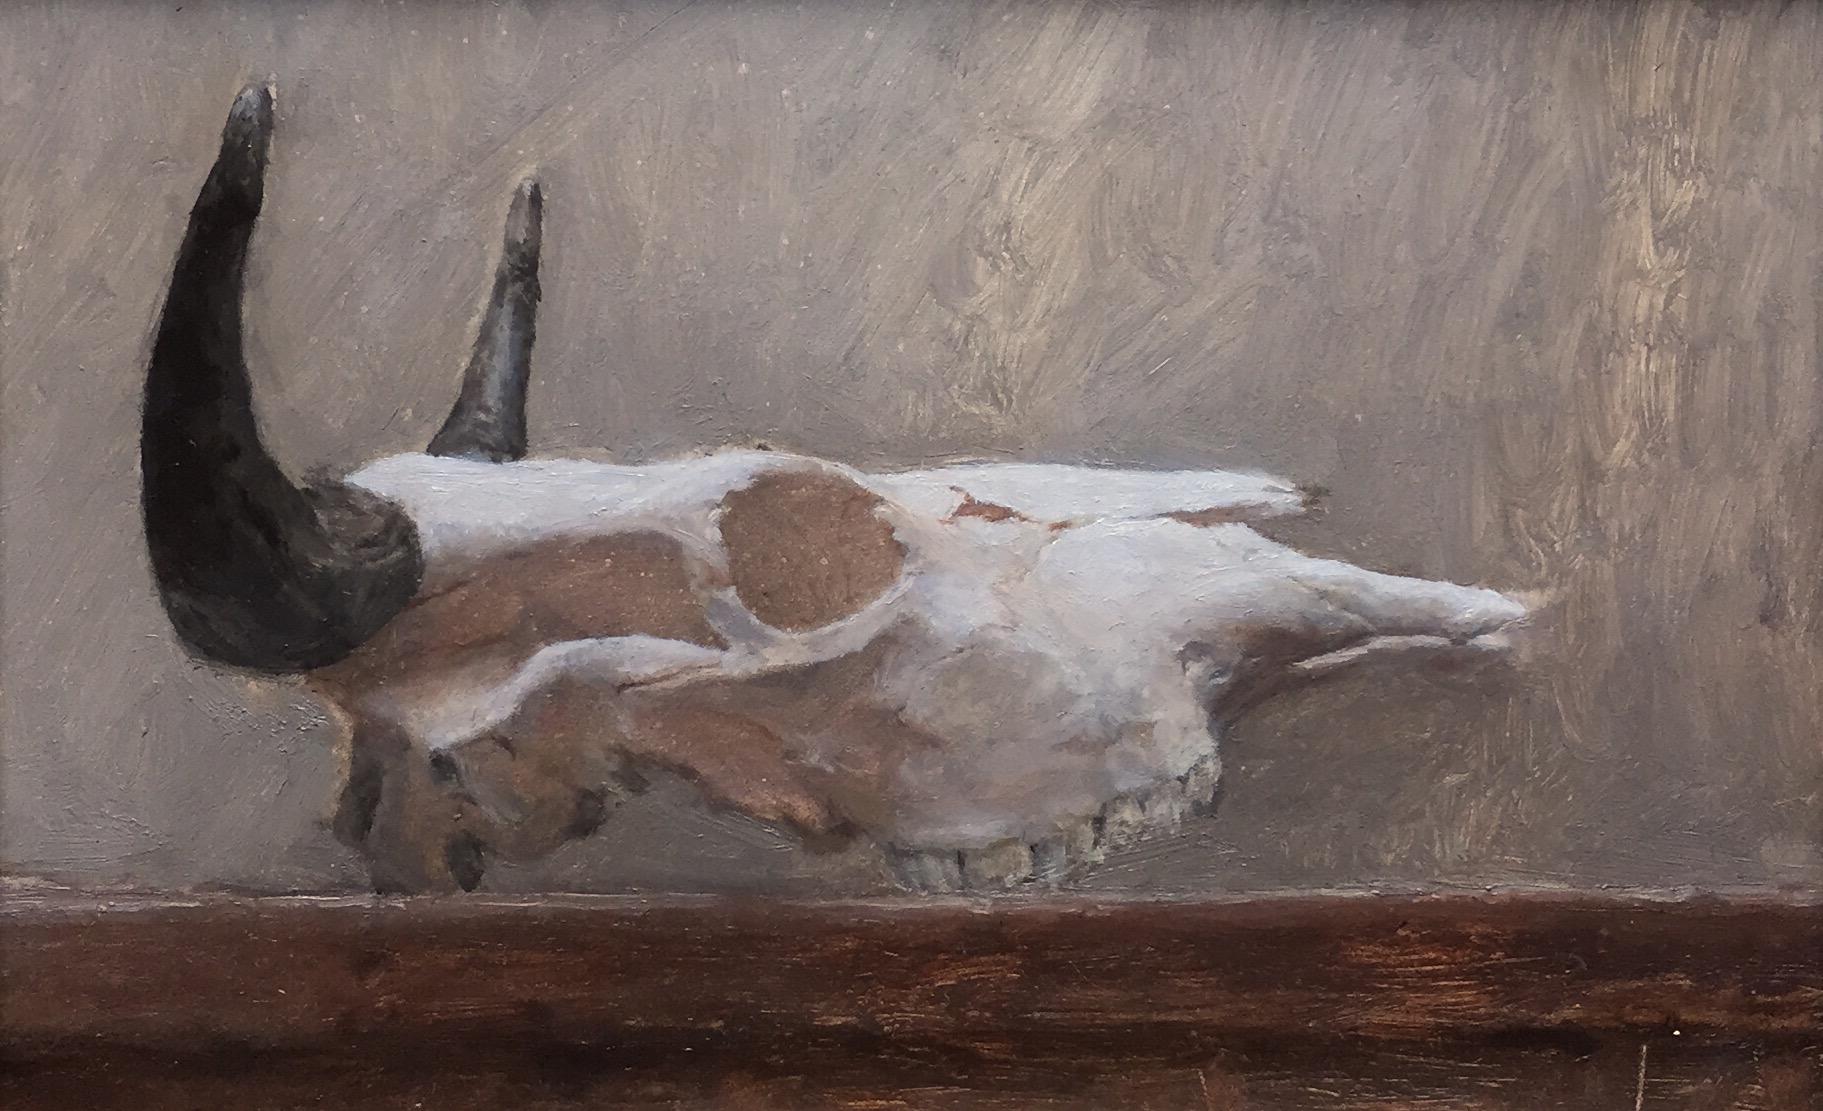  Kevin Müller Cisneros,  Steer   Skull,&nbsp; oil on panel, 6.5x9.5 in 